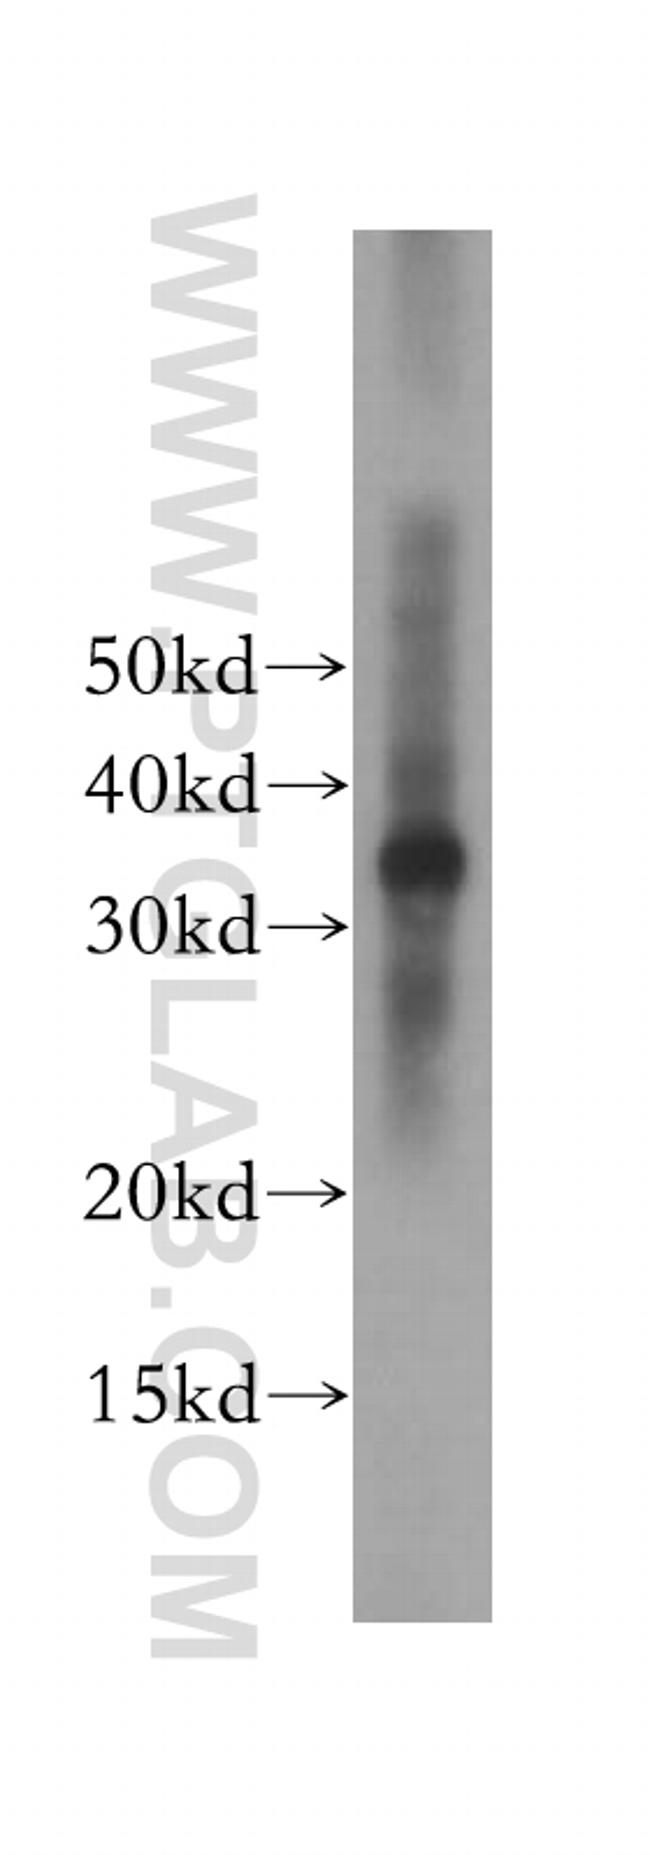 TCEA1 Antibody in Western Blot (WB)